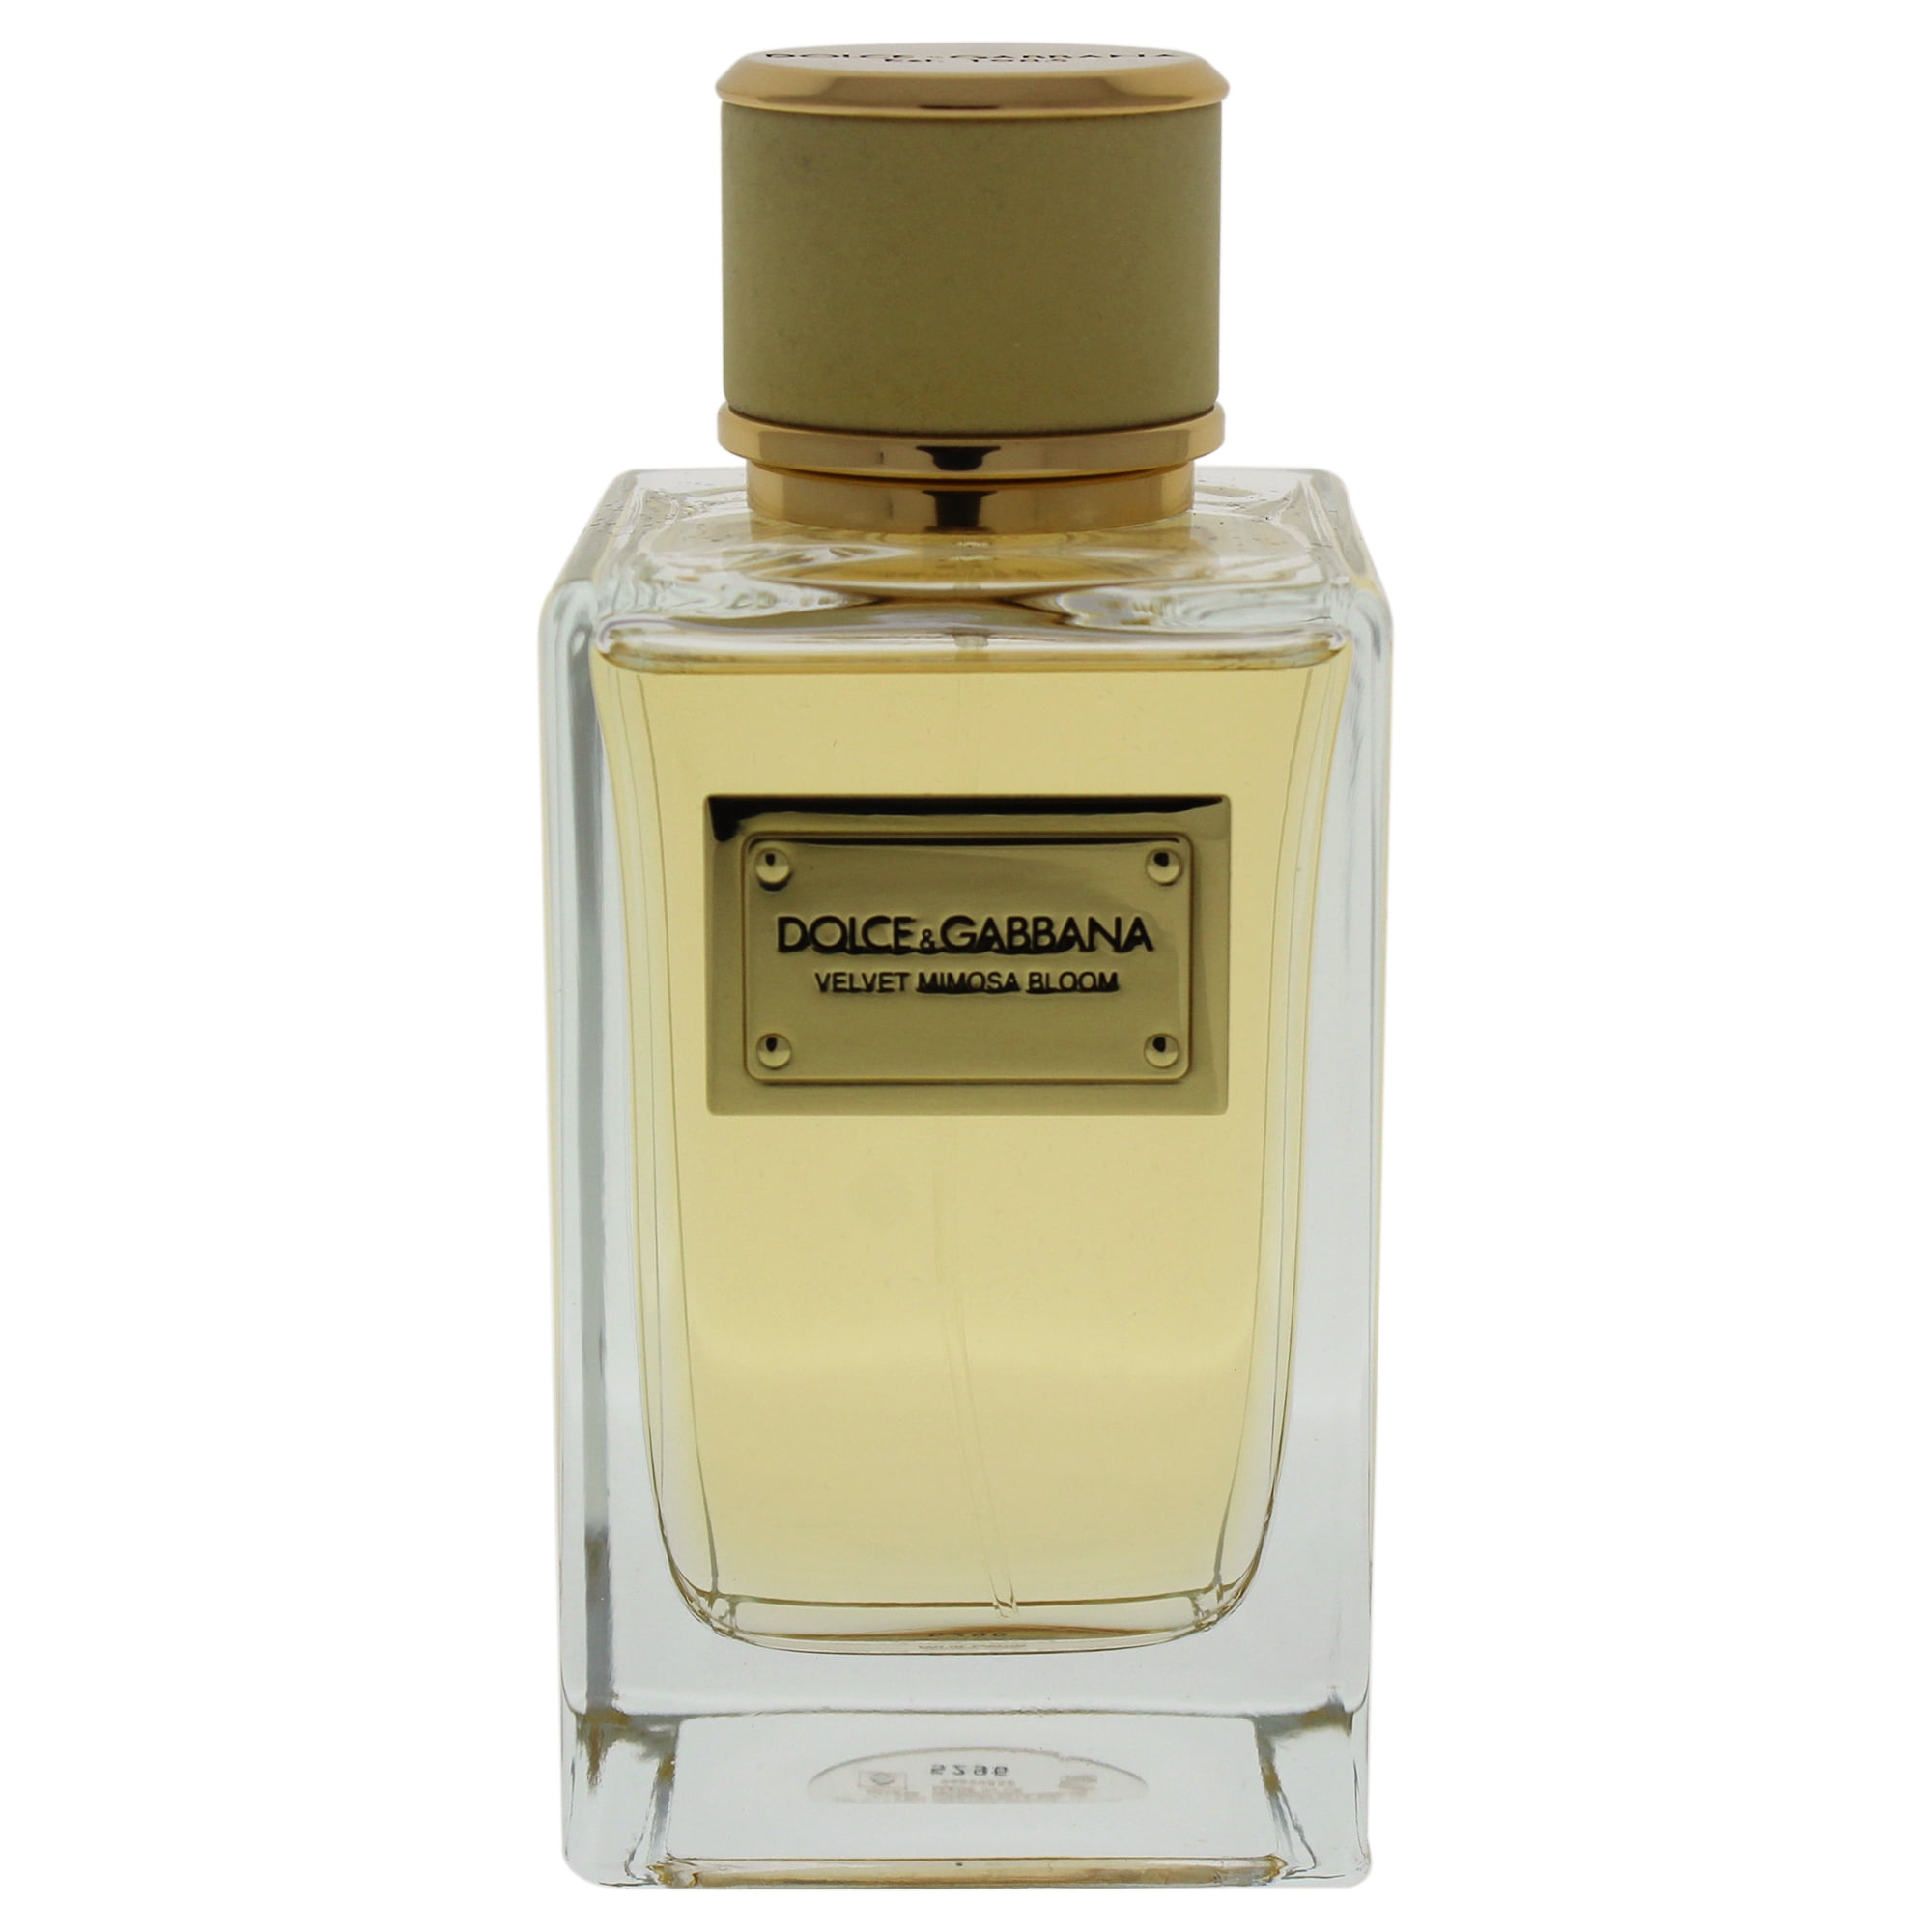 Dolce & Gabbana Velvet Mimosa Bloom Eau De Parfum Spray 5 oz - Walmart.com